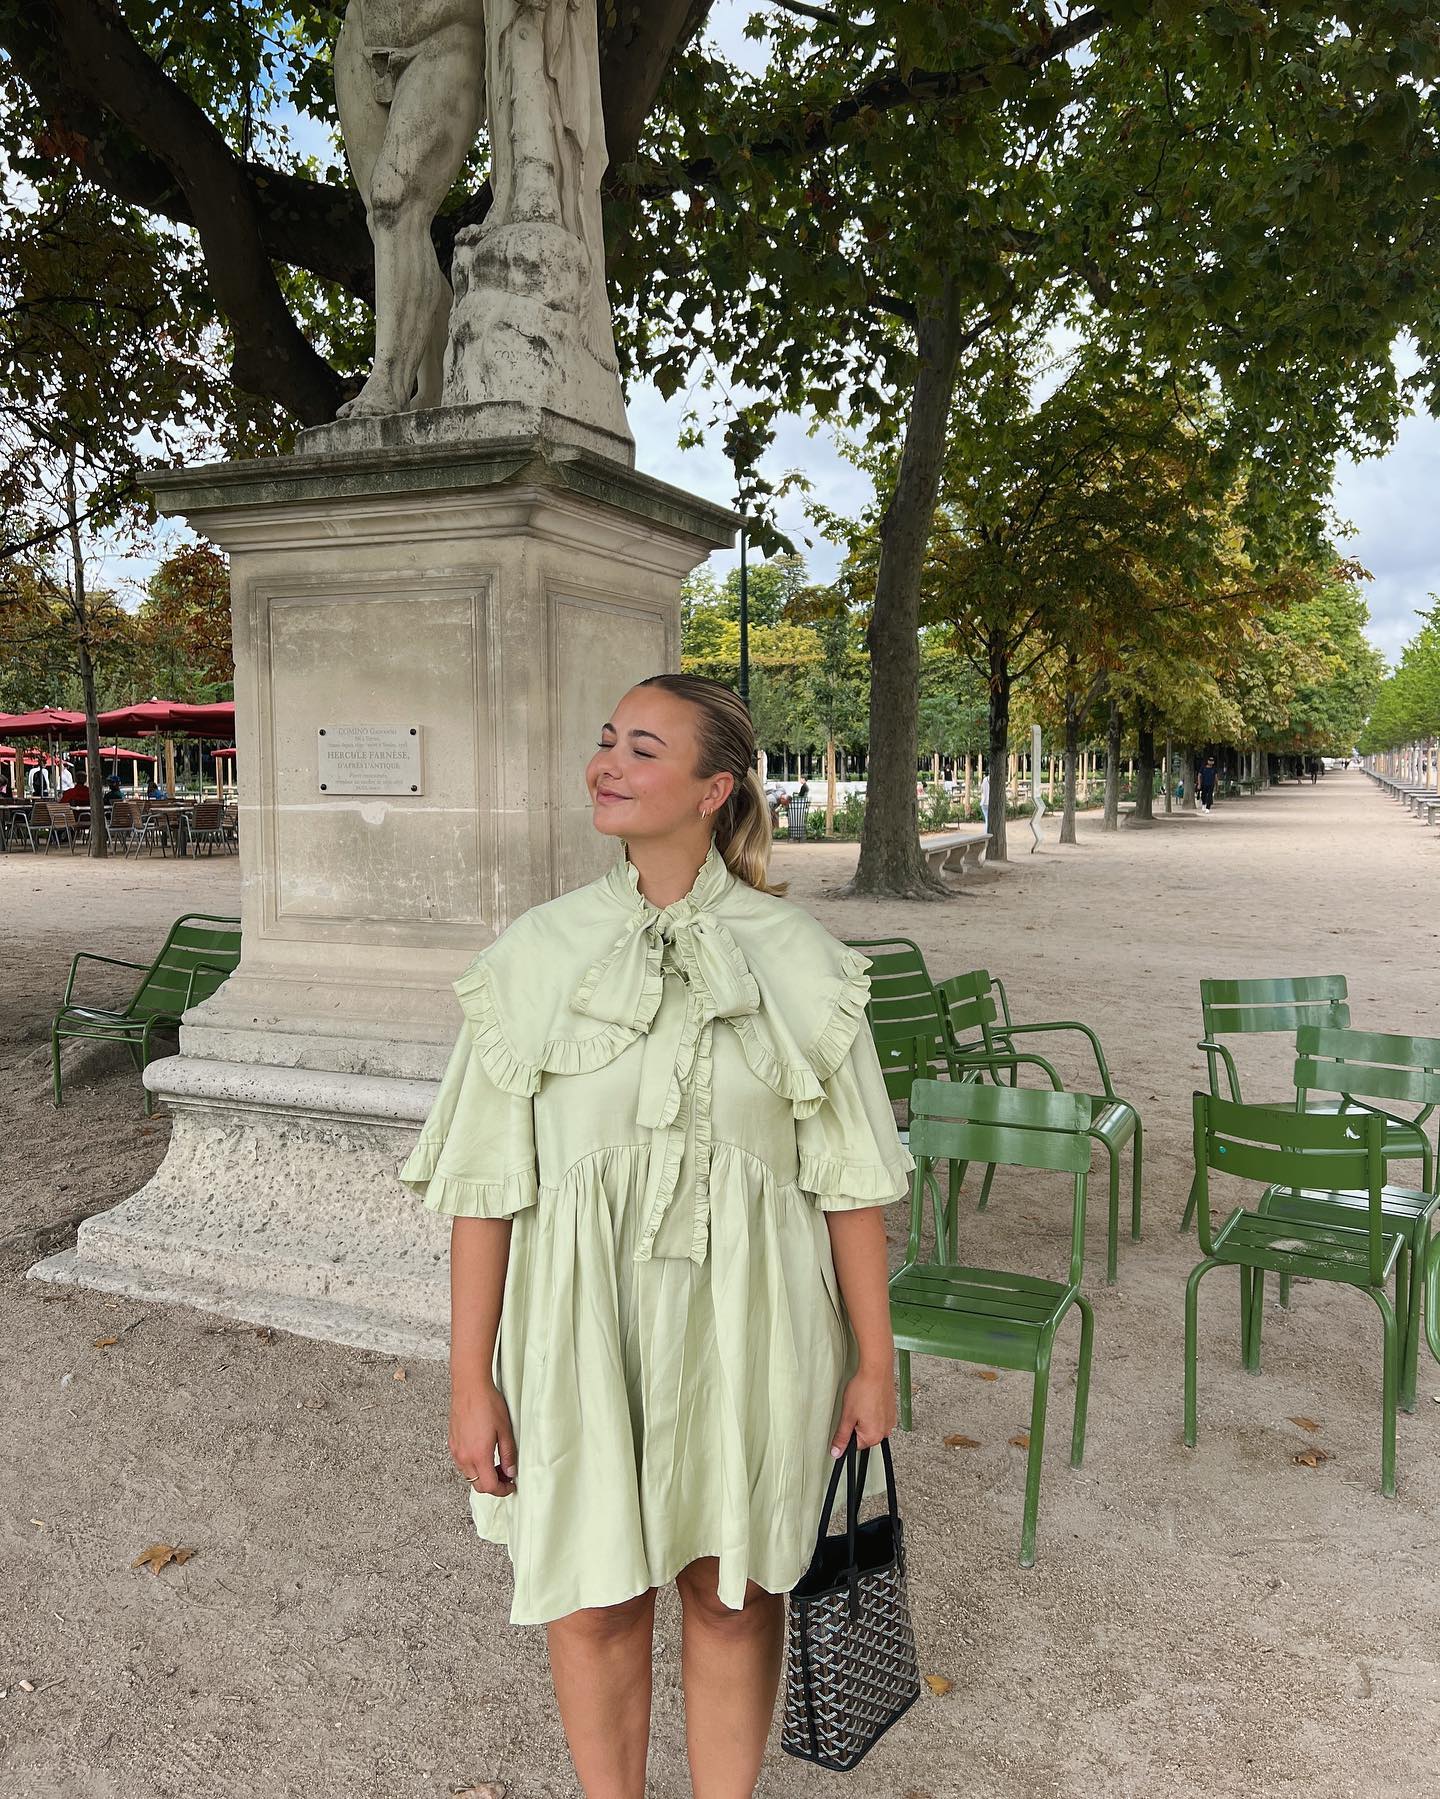 Influencer styles a green mini dress.